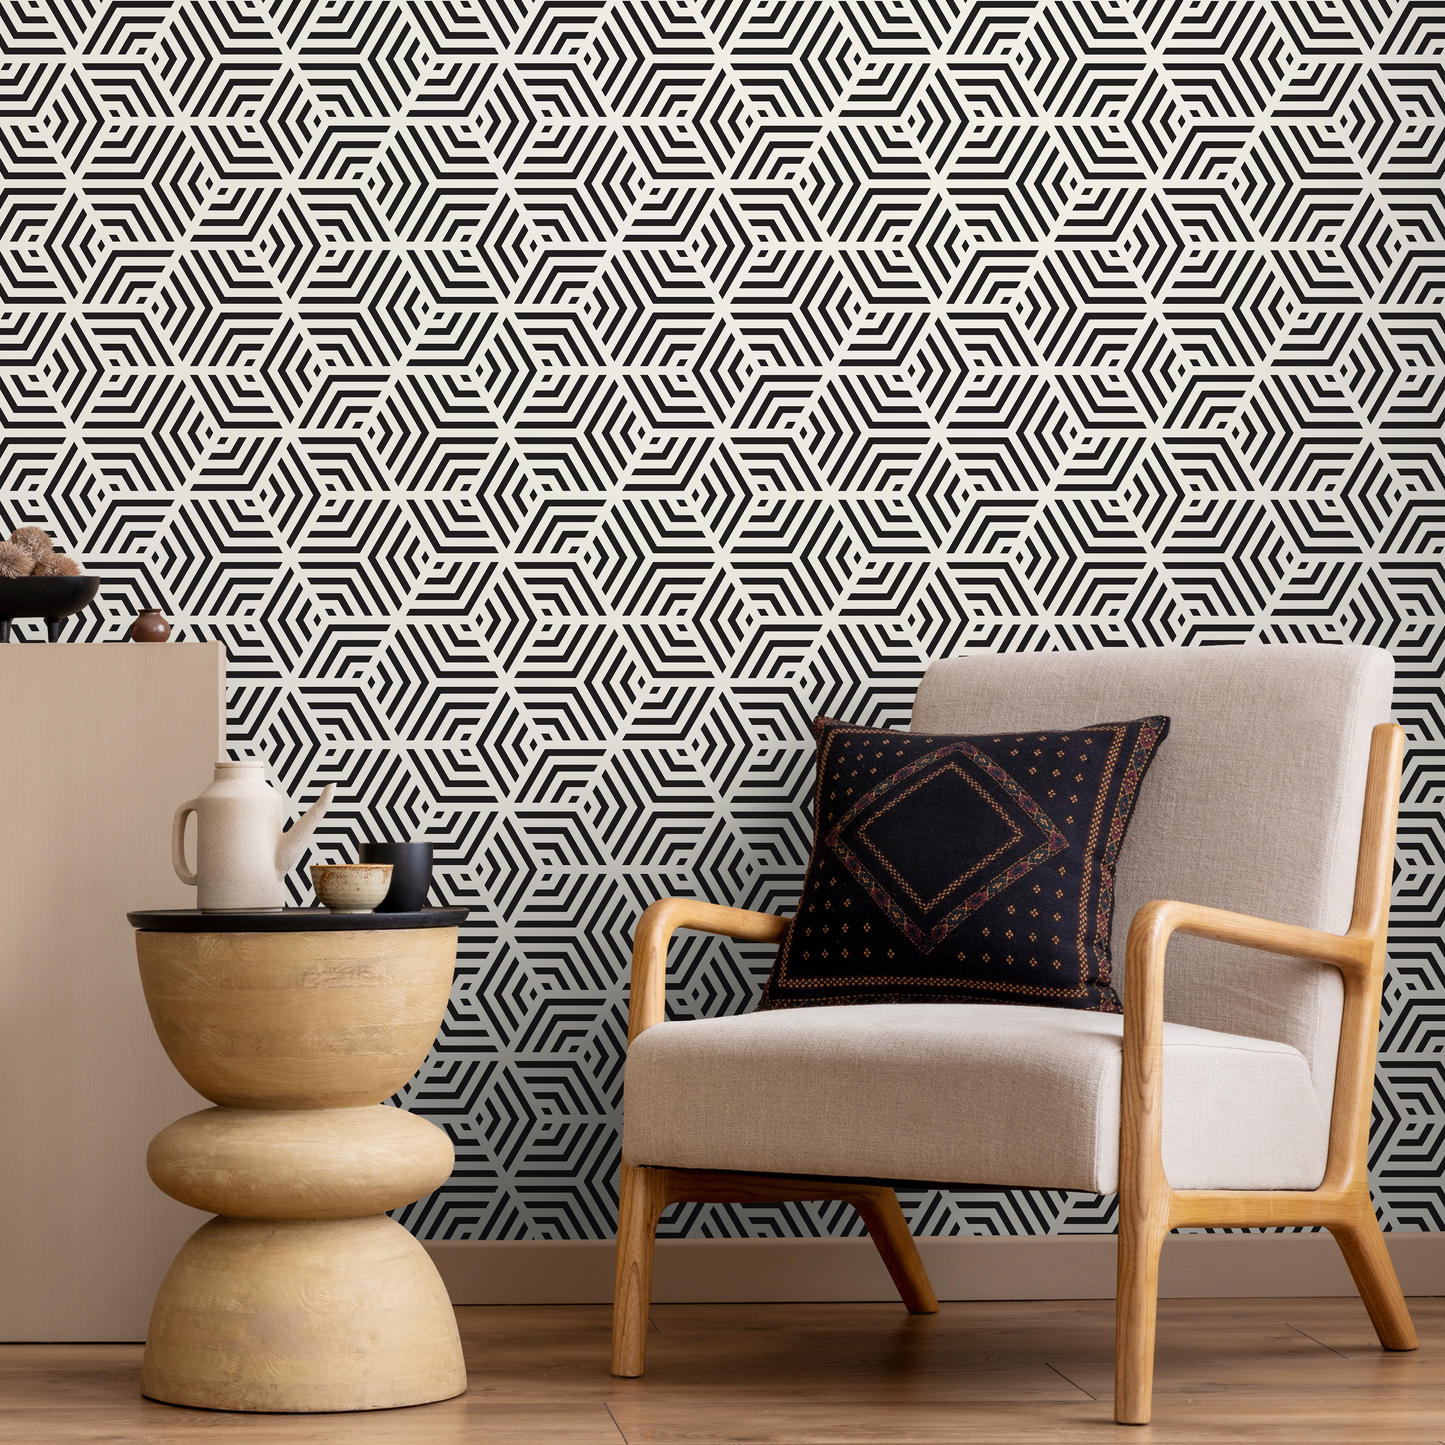 Removable Wallpaper, Scandinavian Wallpaper, Temporary Wallpaper, Minimalistic Wallpaper, Peel and Stick Wallpaper, Wall Paper, Boho - A331